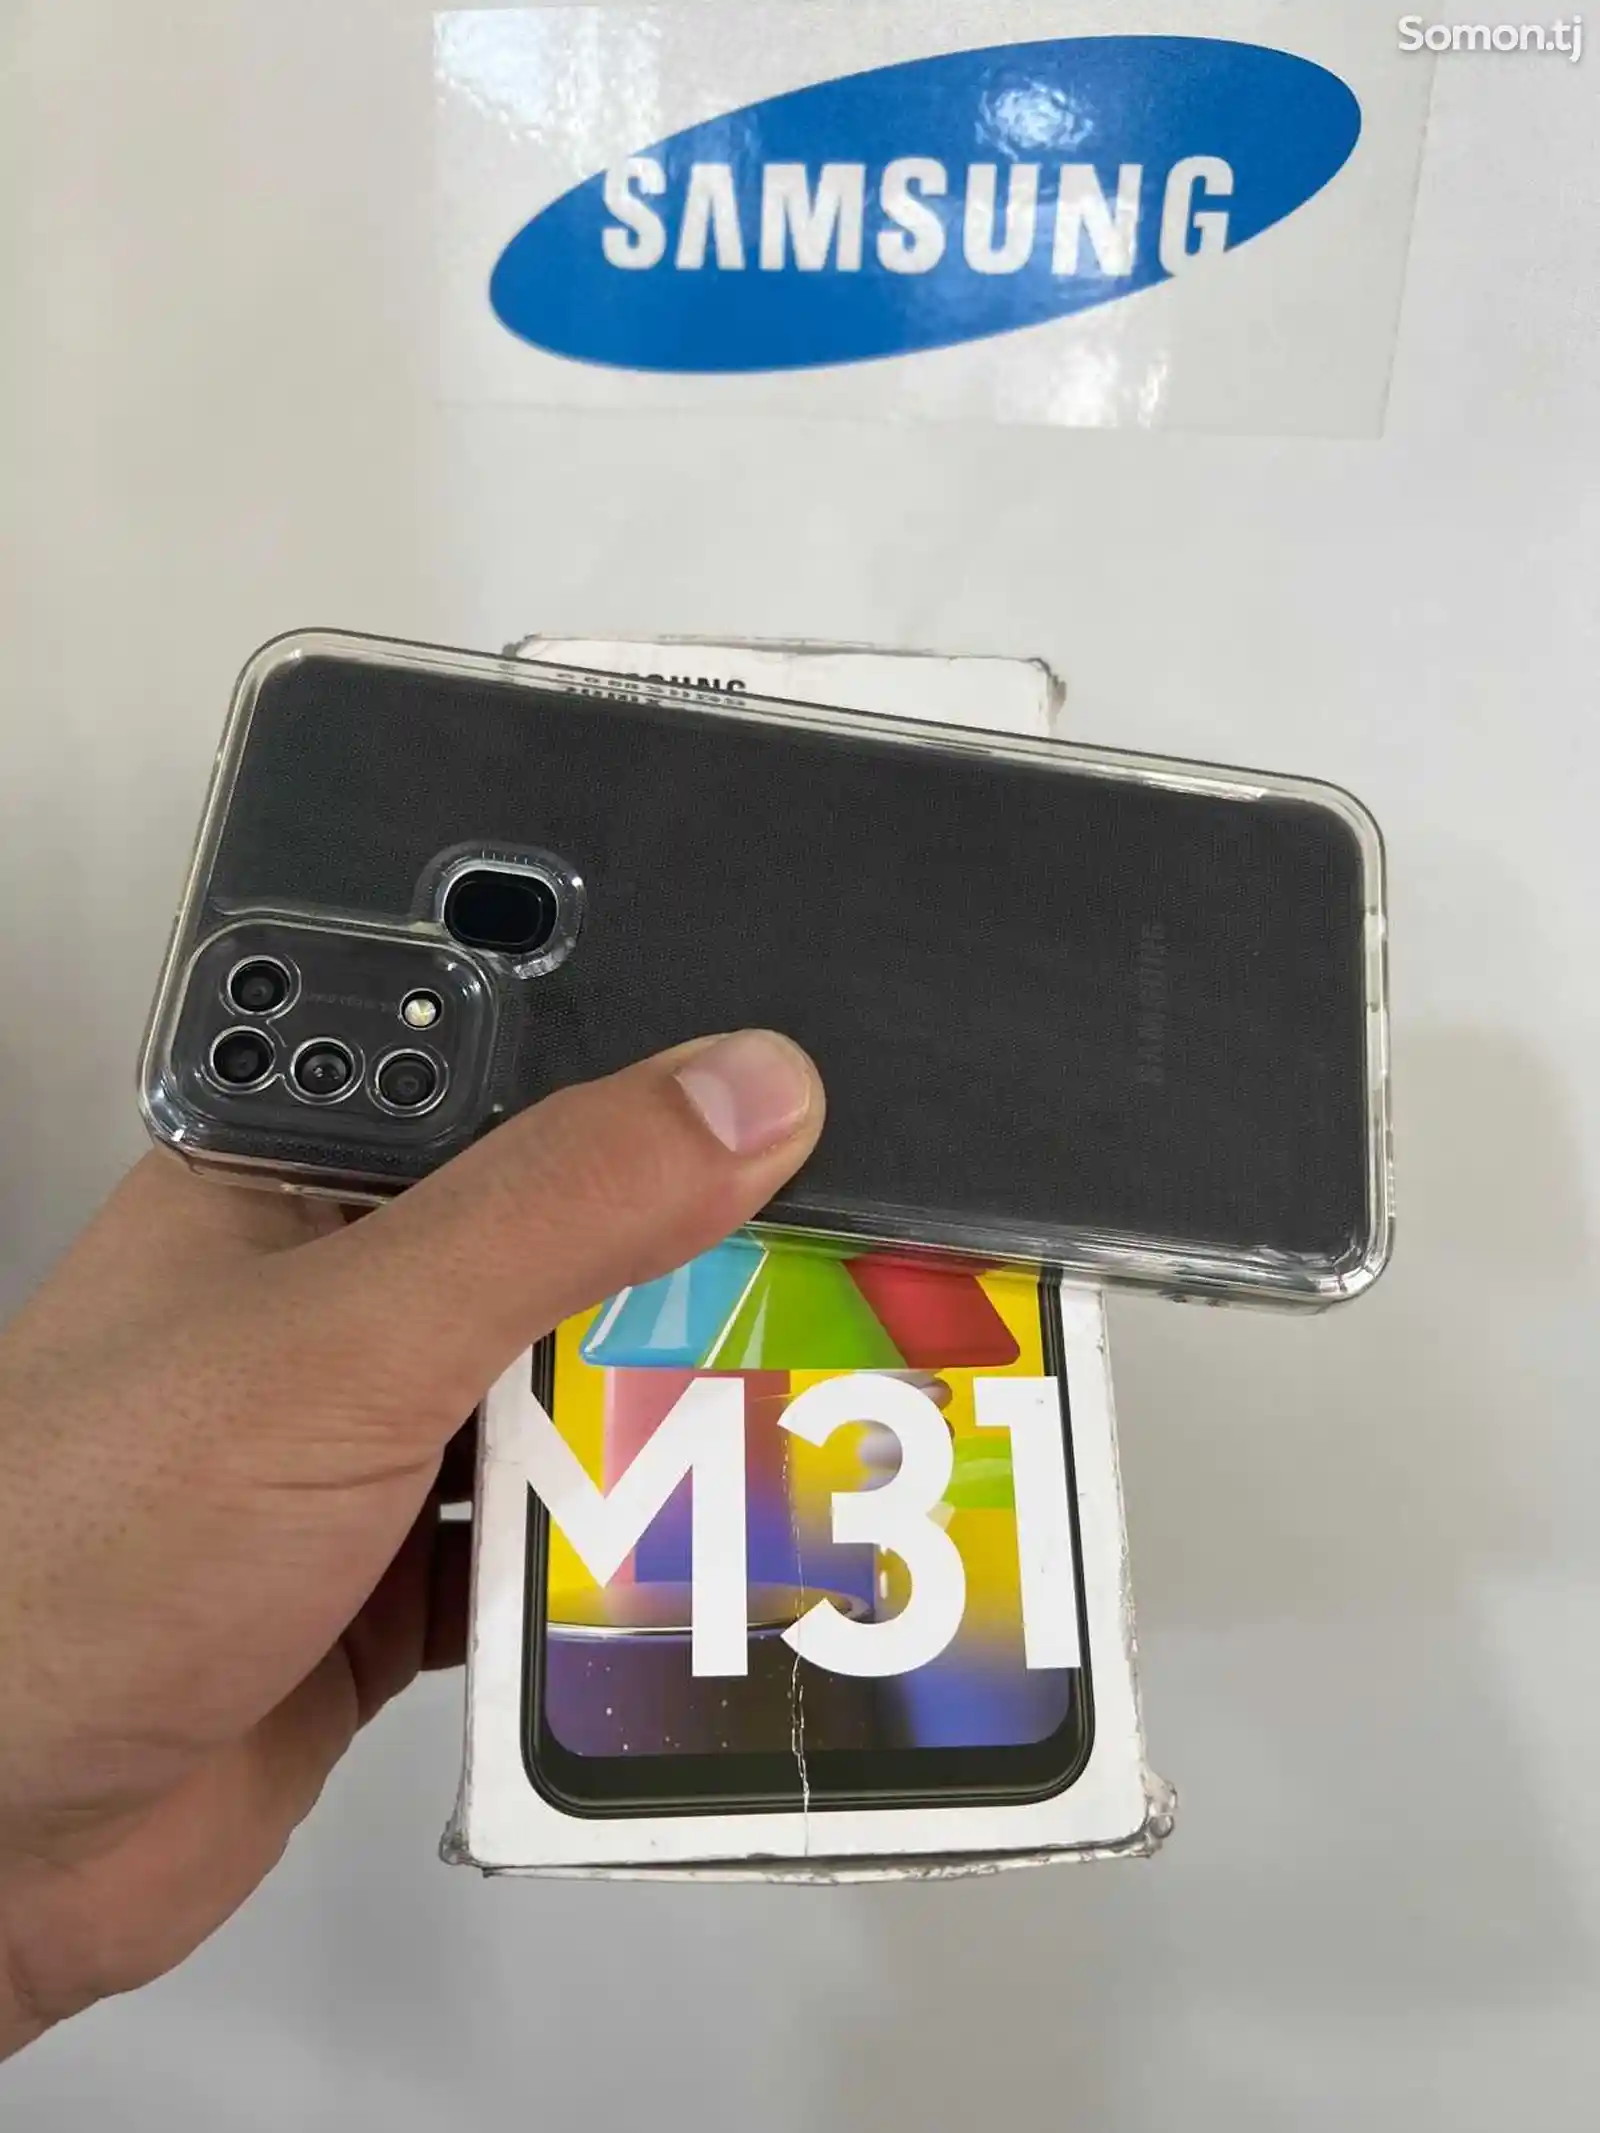 Samsung Galaxy M31 128GB